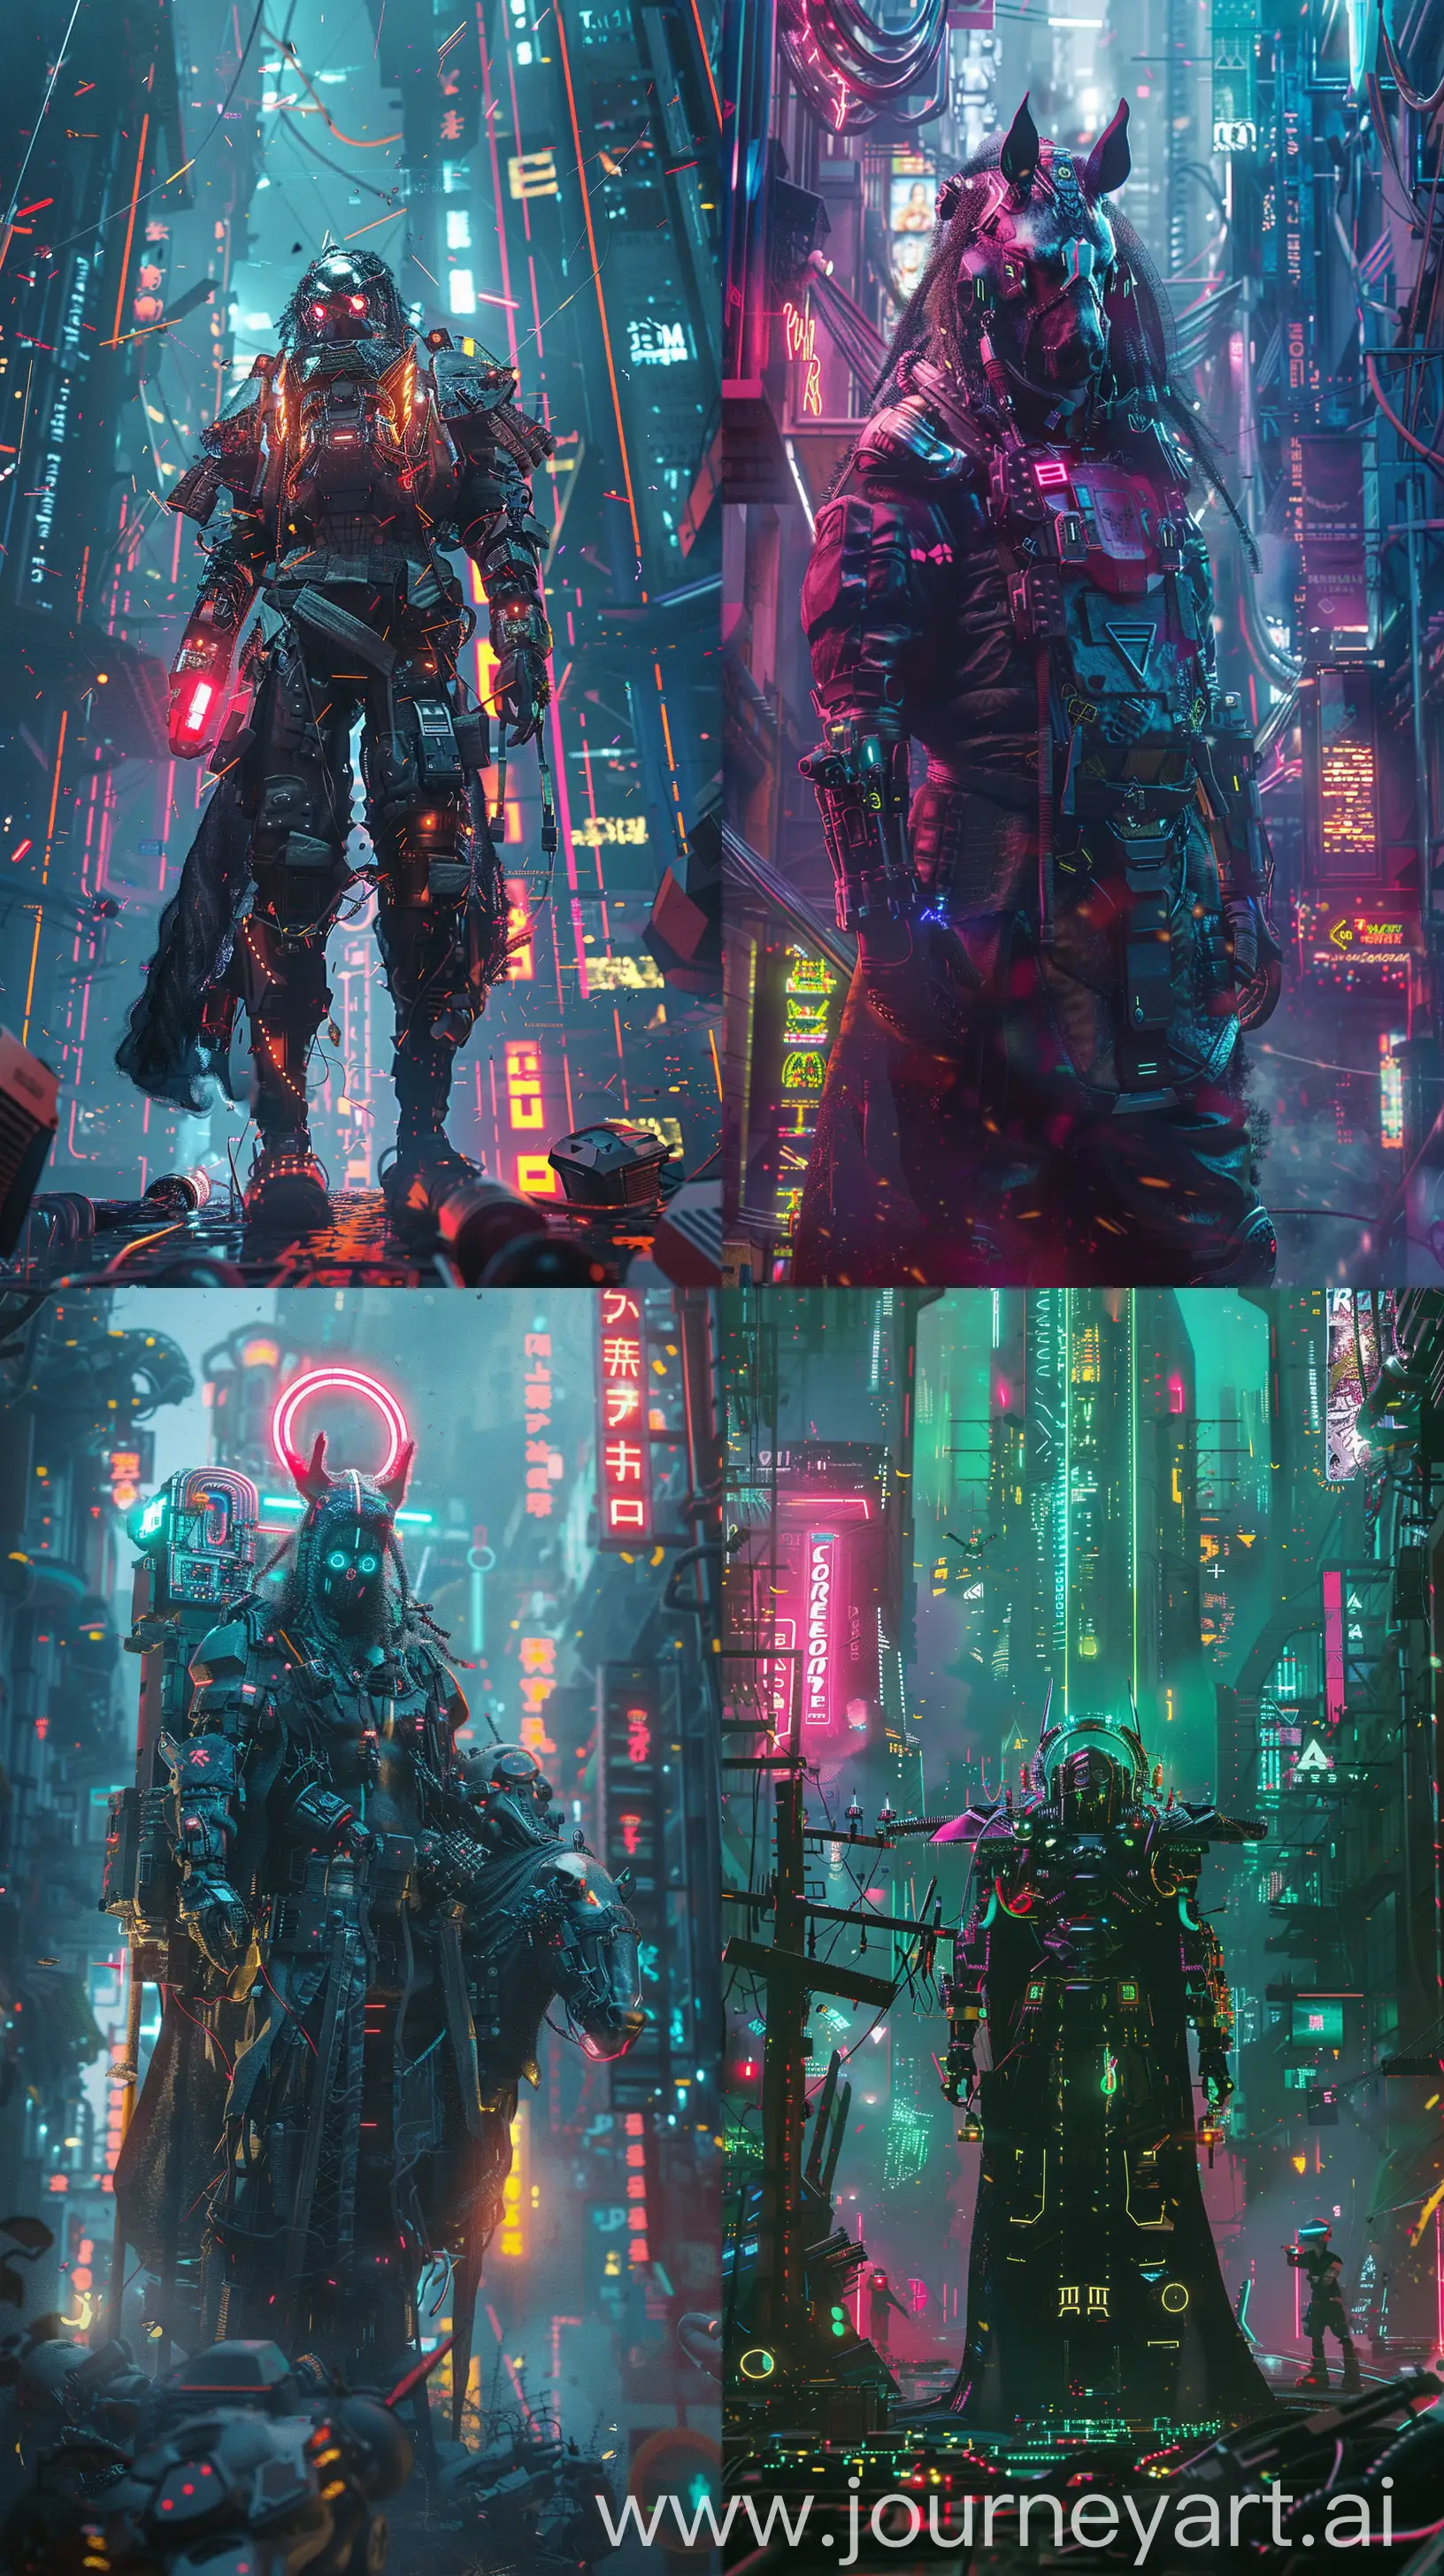 Cyberpunk-Horseman-of-the-Apocalypse-Dystopian-Authority-in-Neon-Lights